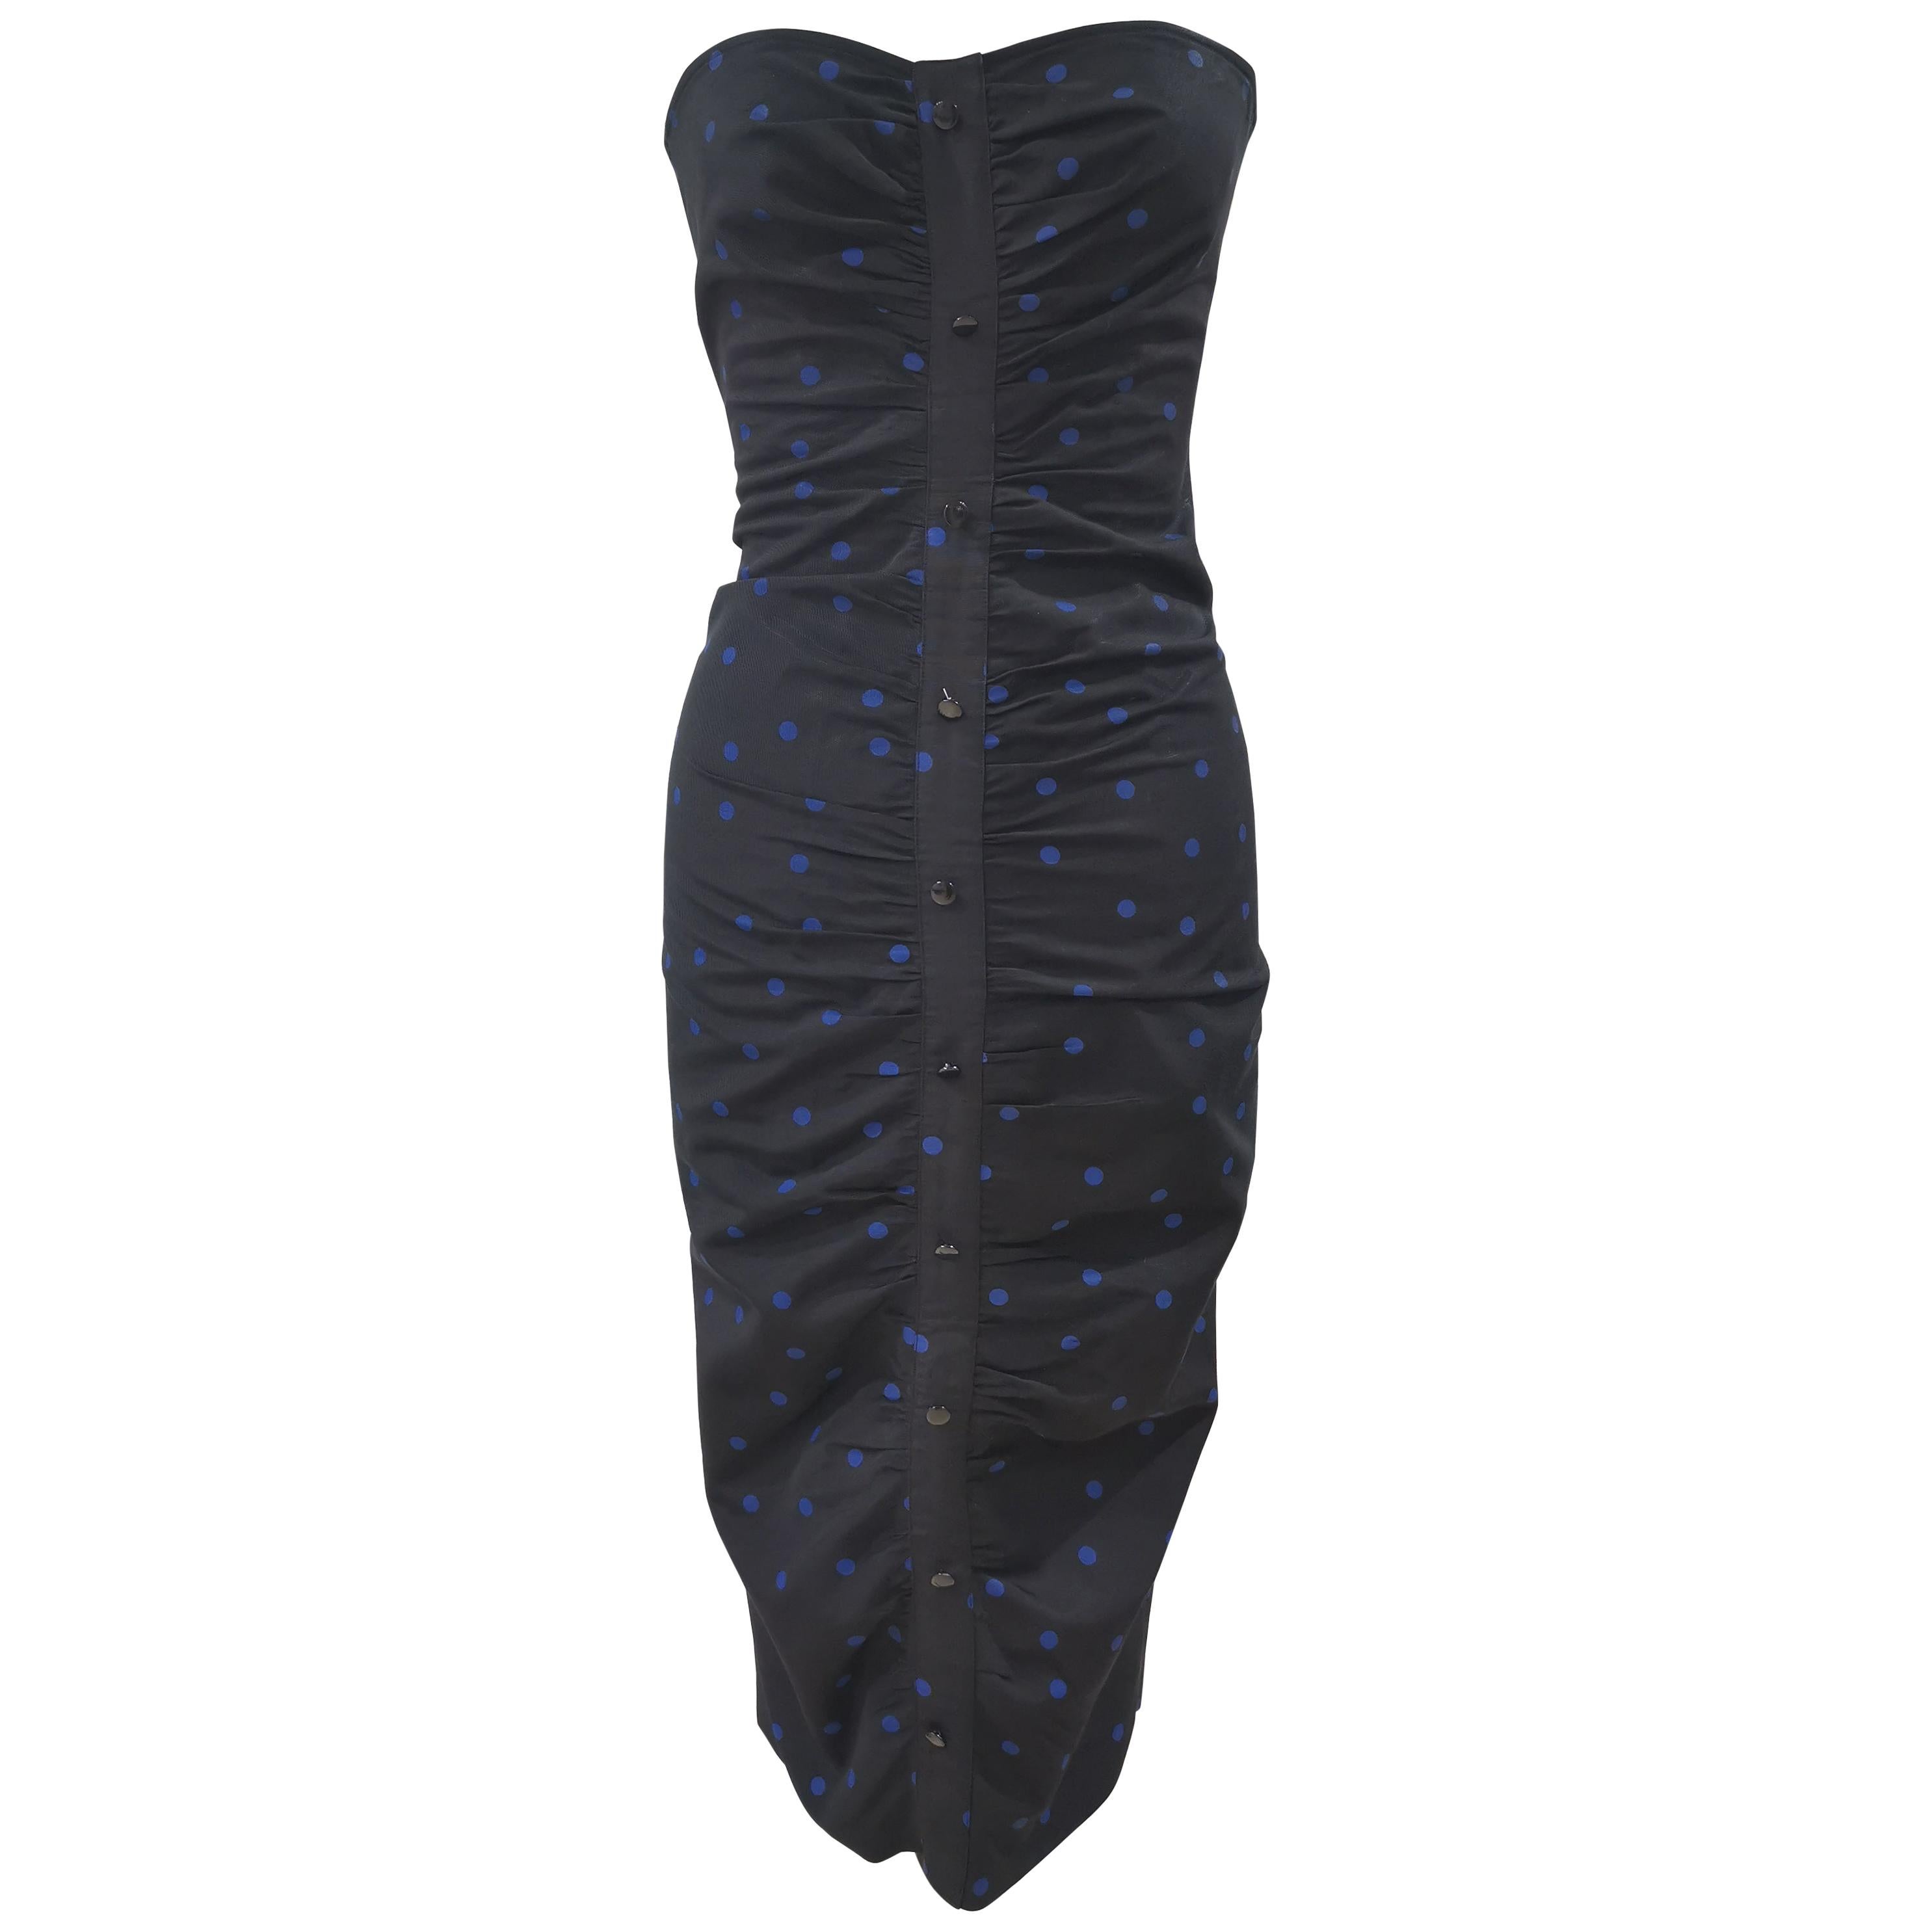 Vintage Bibi la Luna black blue pois dress